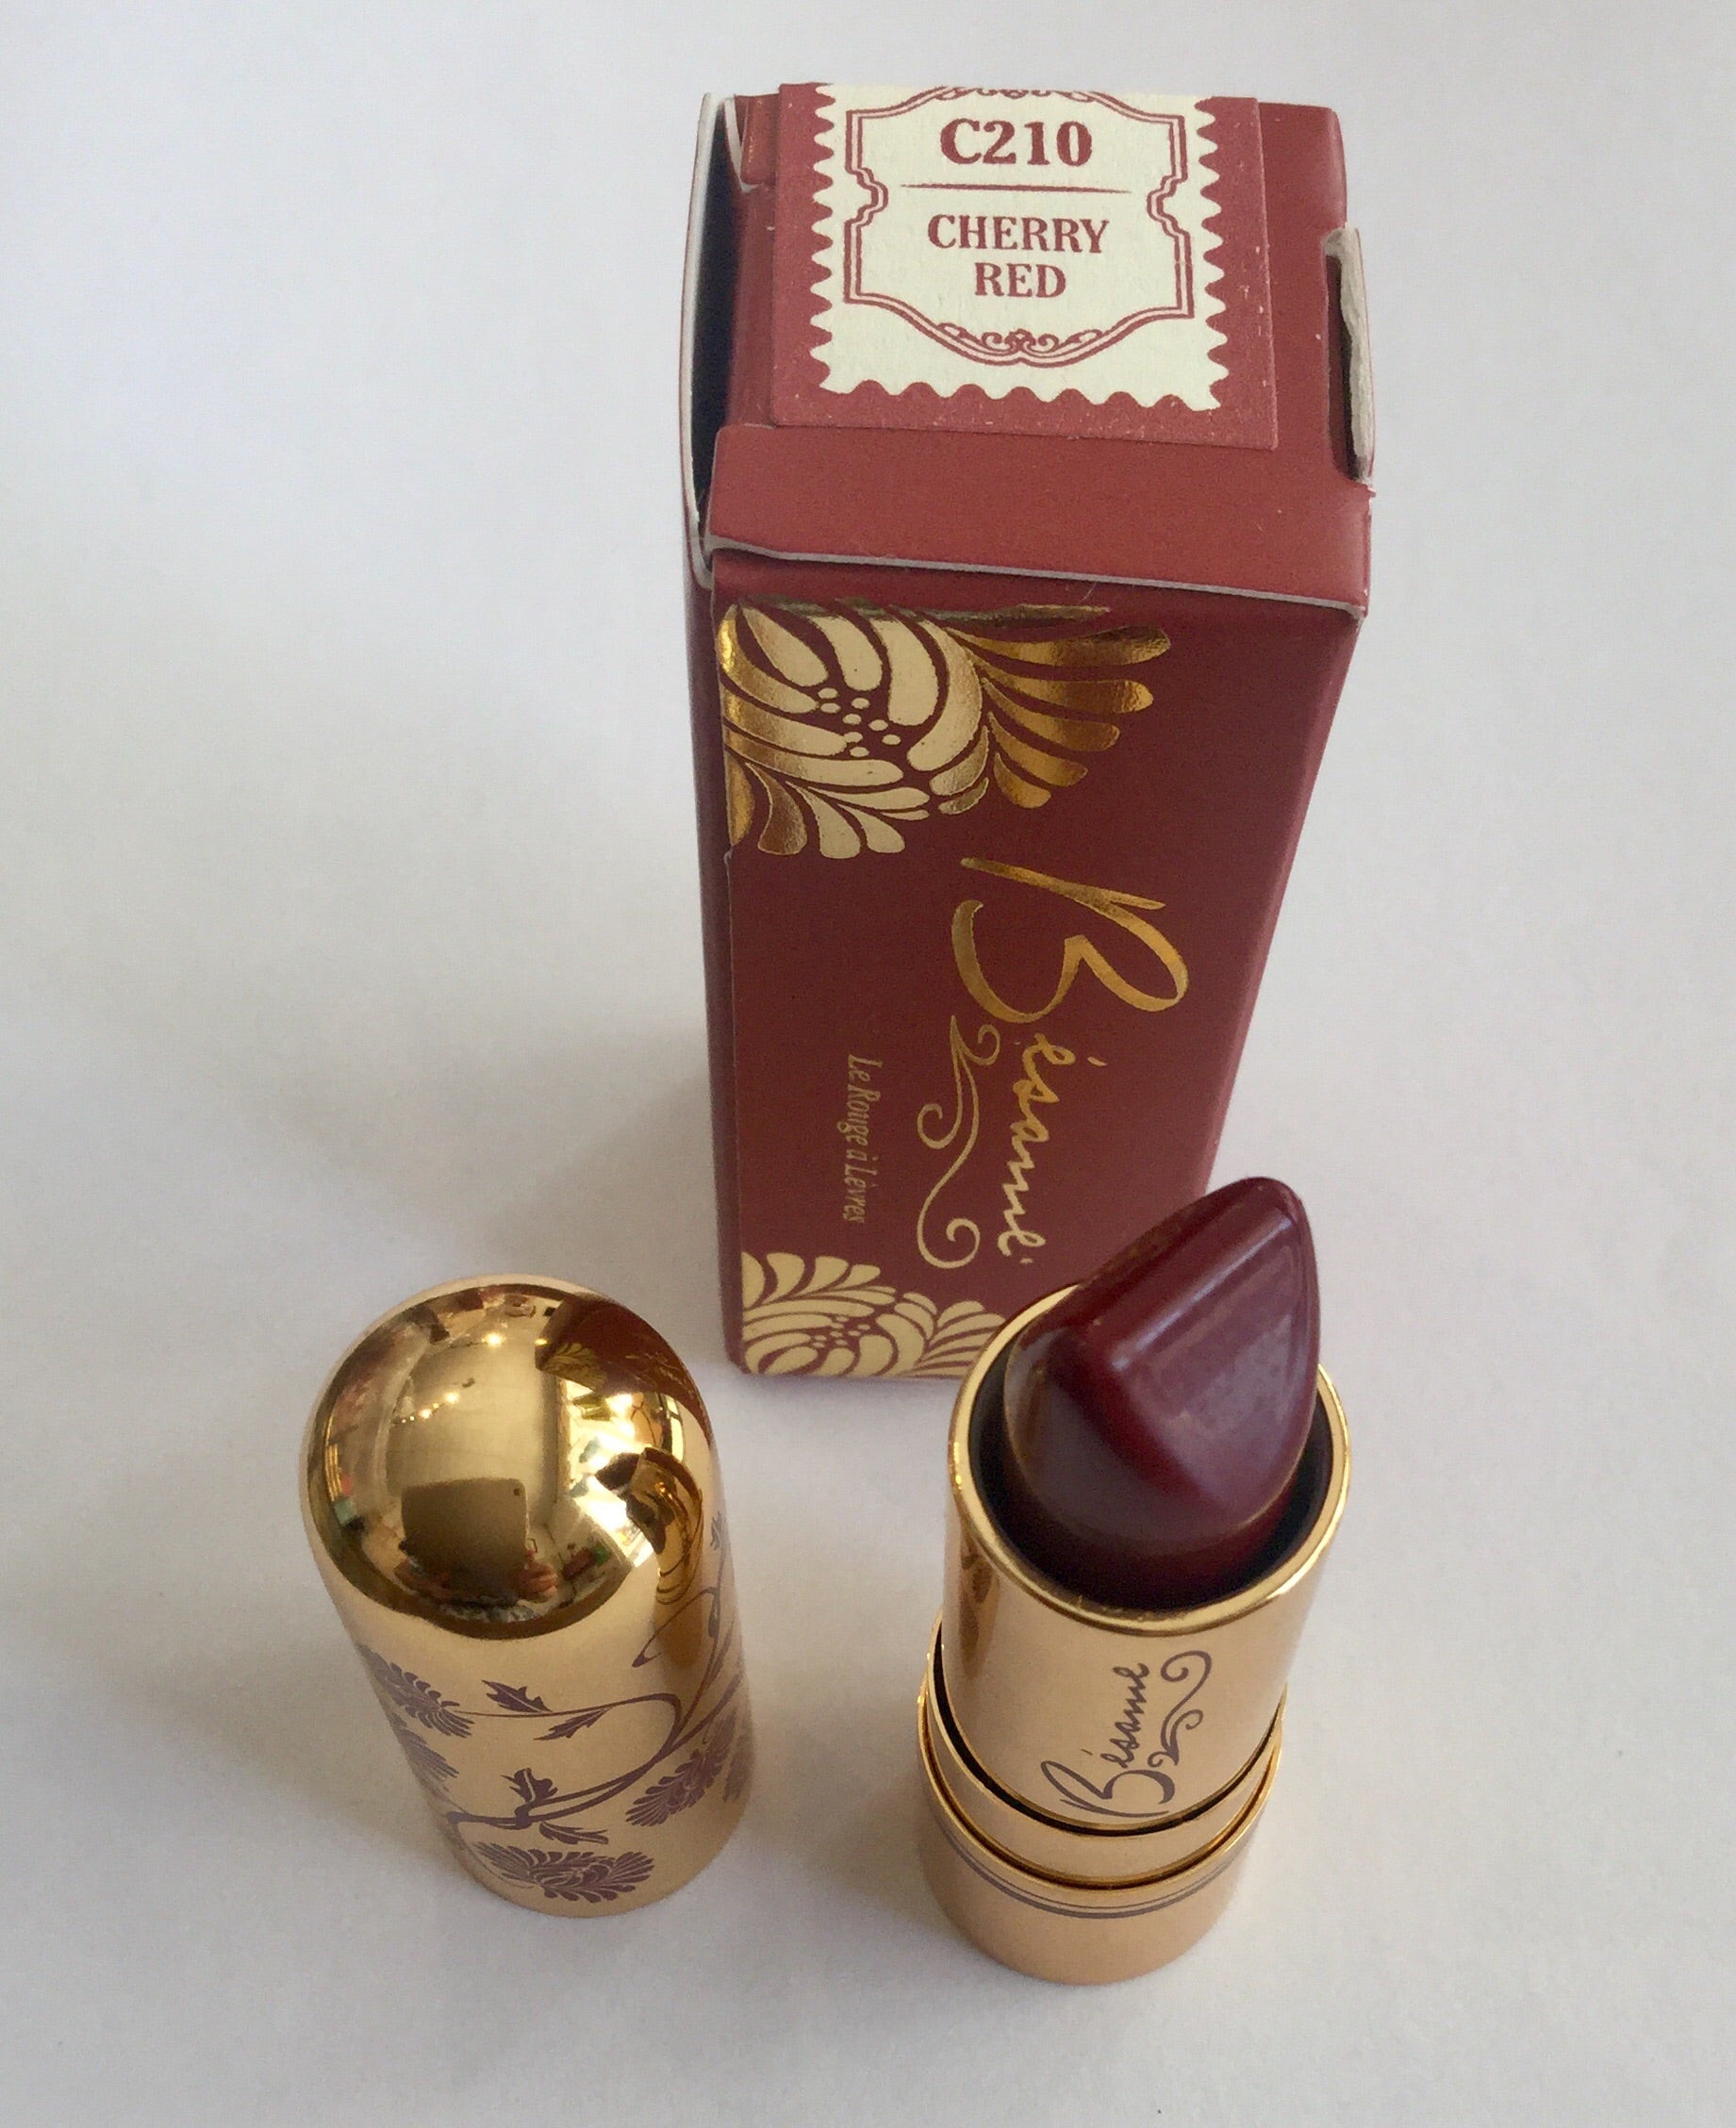 1935 Besame Cherry Red - Lipstick - Canada - Vintage Makeup